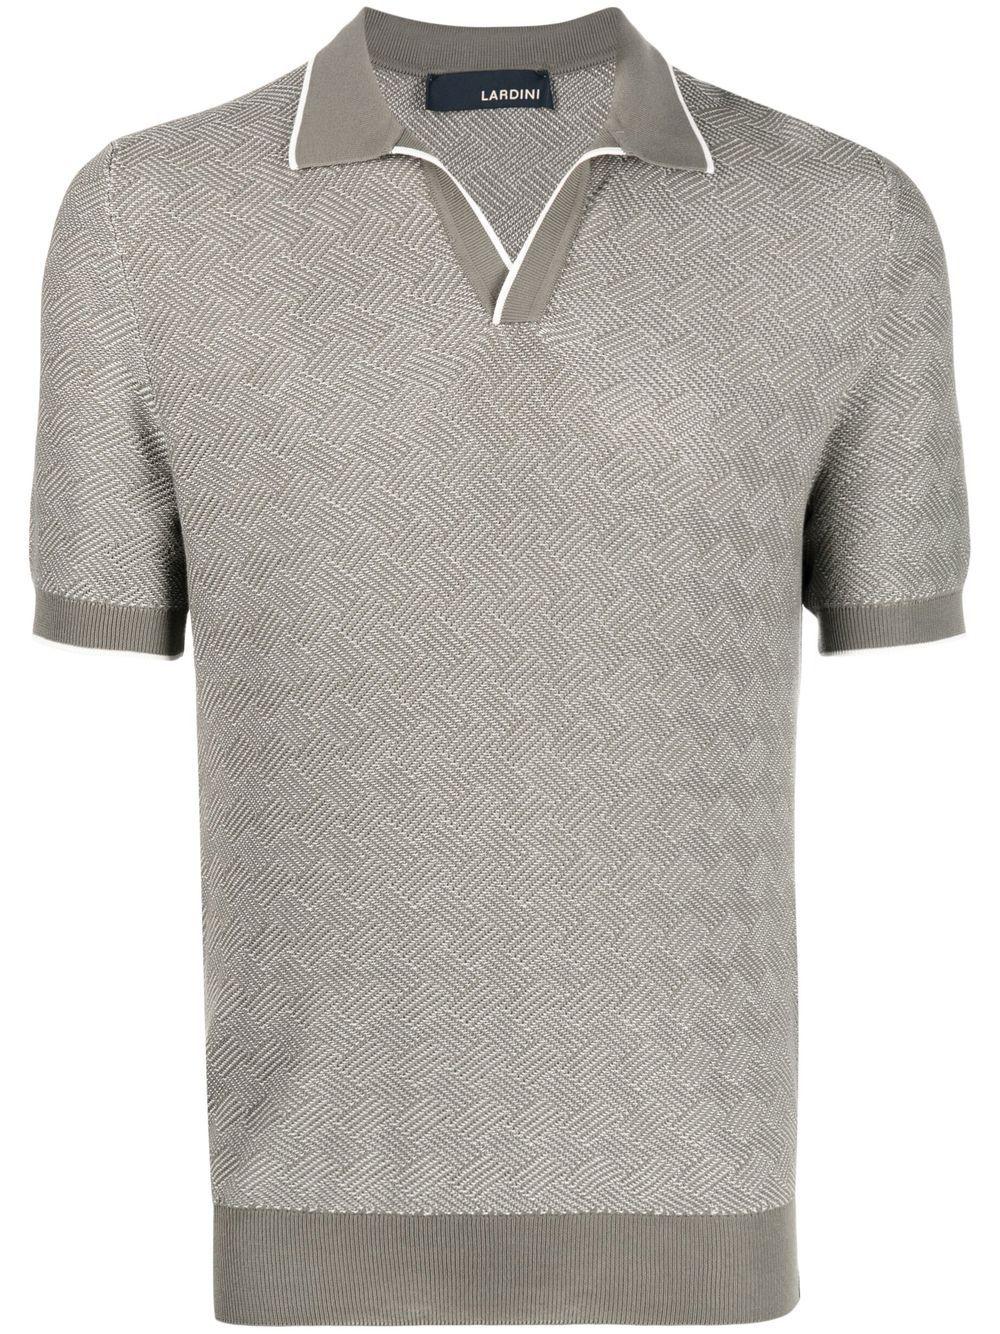 Lardini Jacquard Knitted Polo Shirt in Gray for Men | Lyst